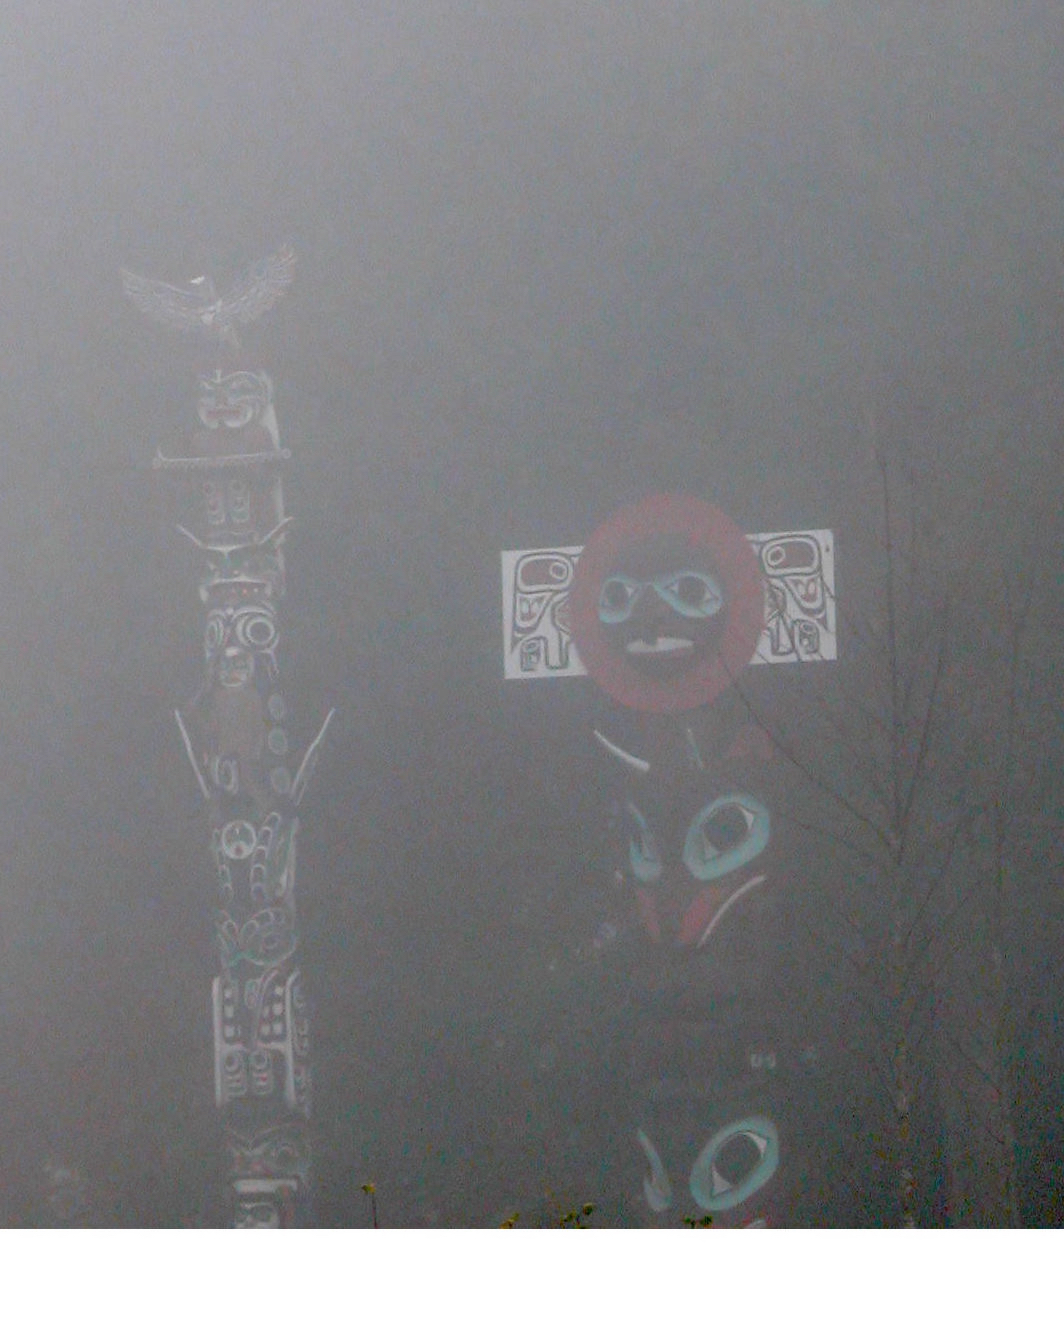 Ghosts, fog. Stanley Park BC